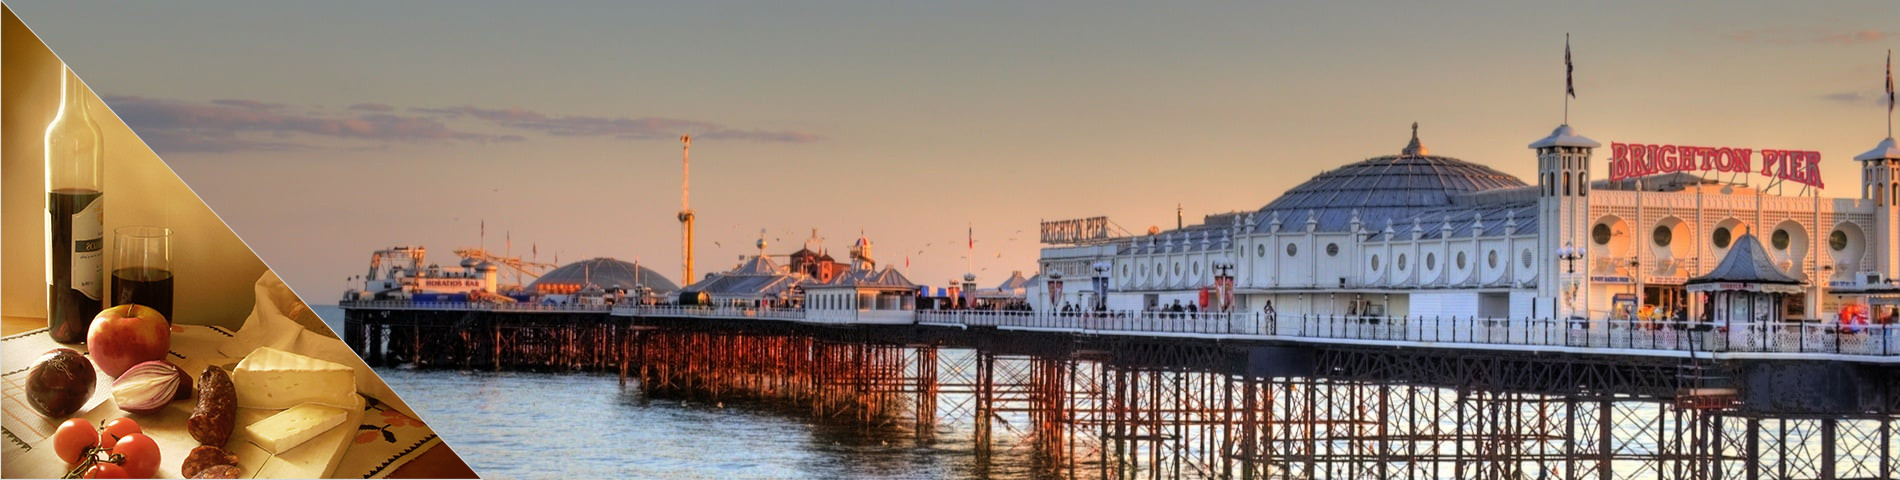 Brighton - Angličtina a Kultura